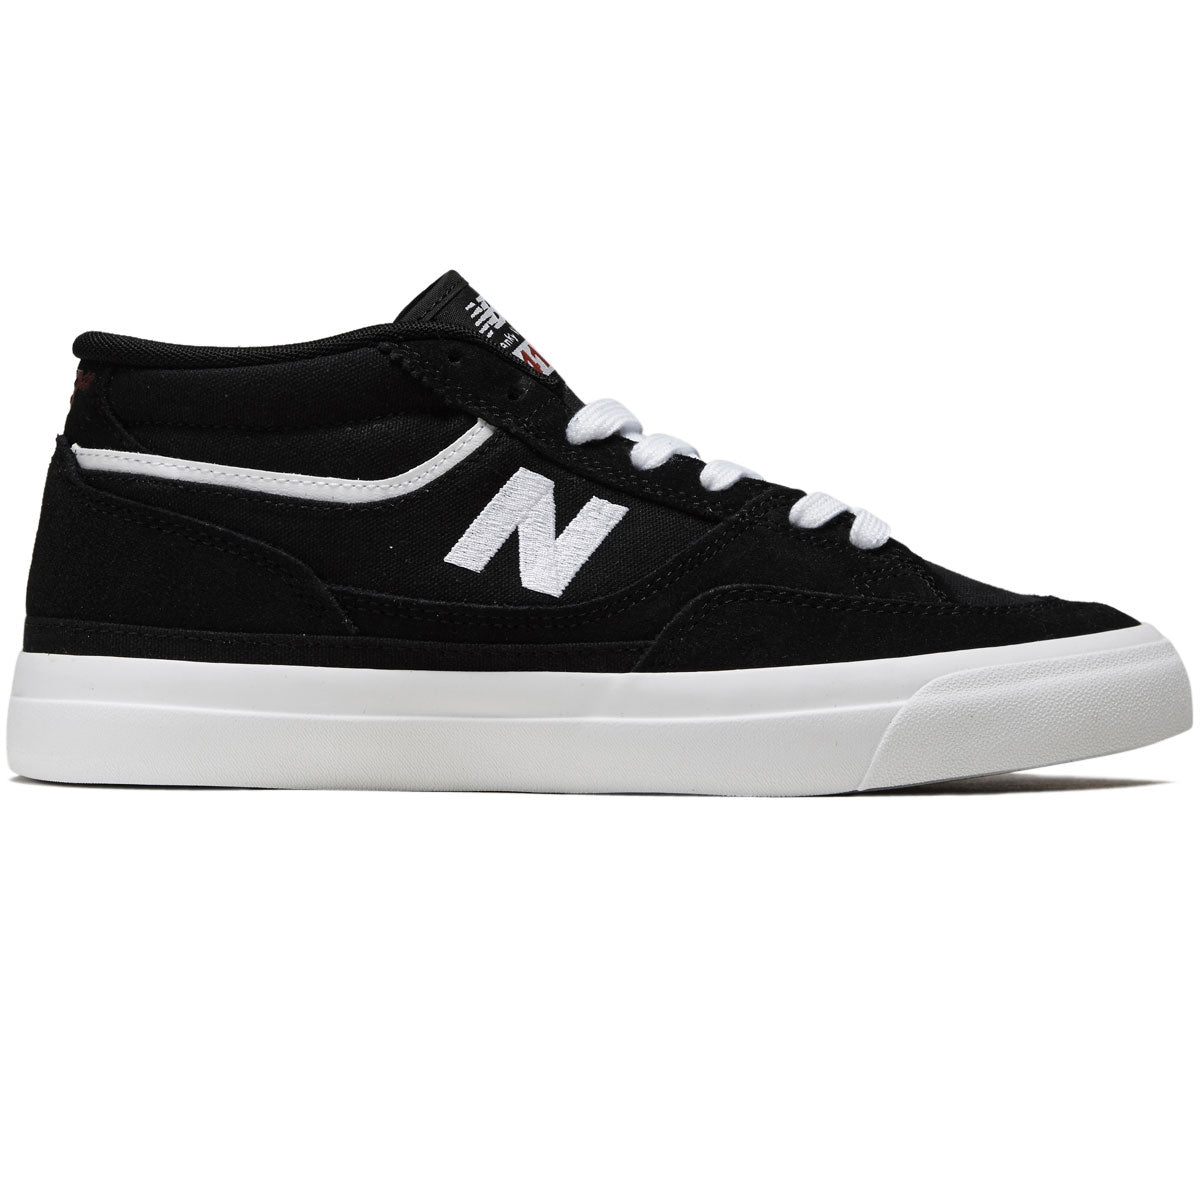 New Balance 417 Villani Shoes - Black/White image 1